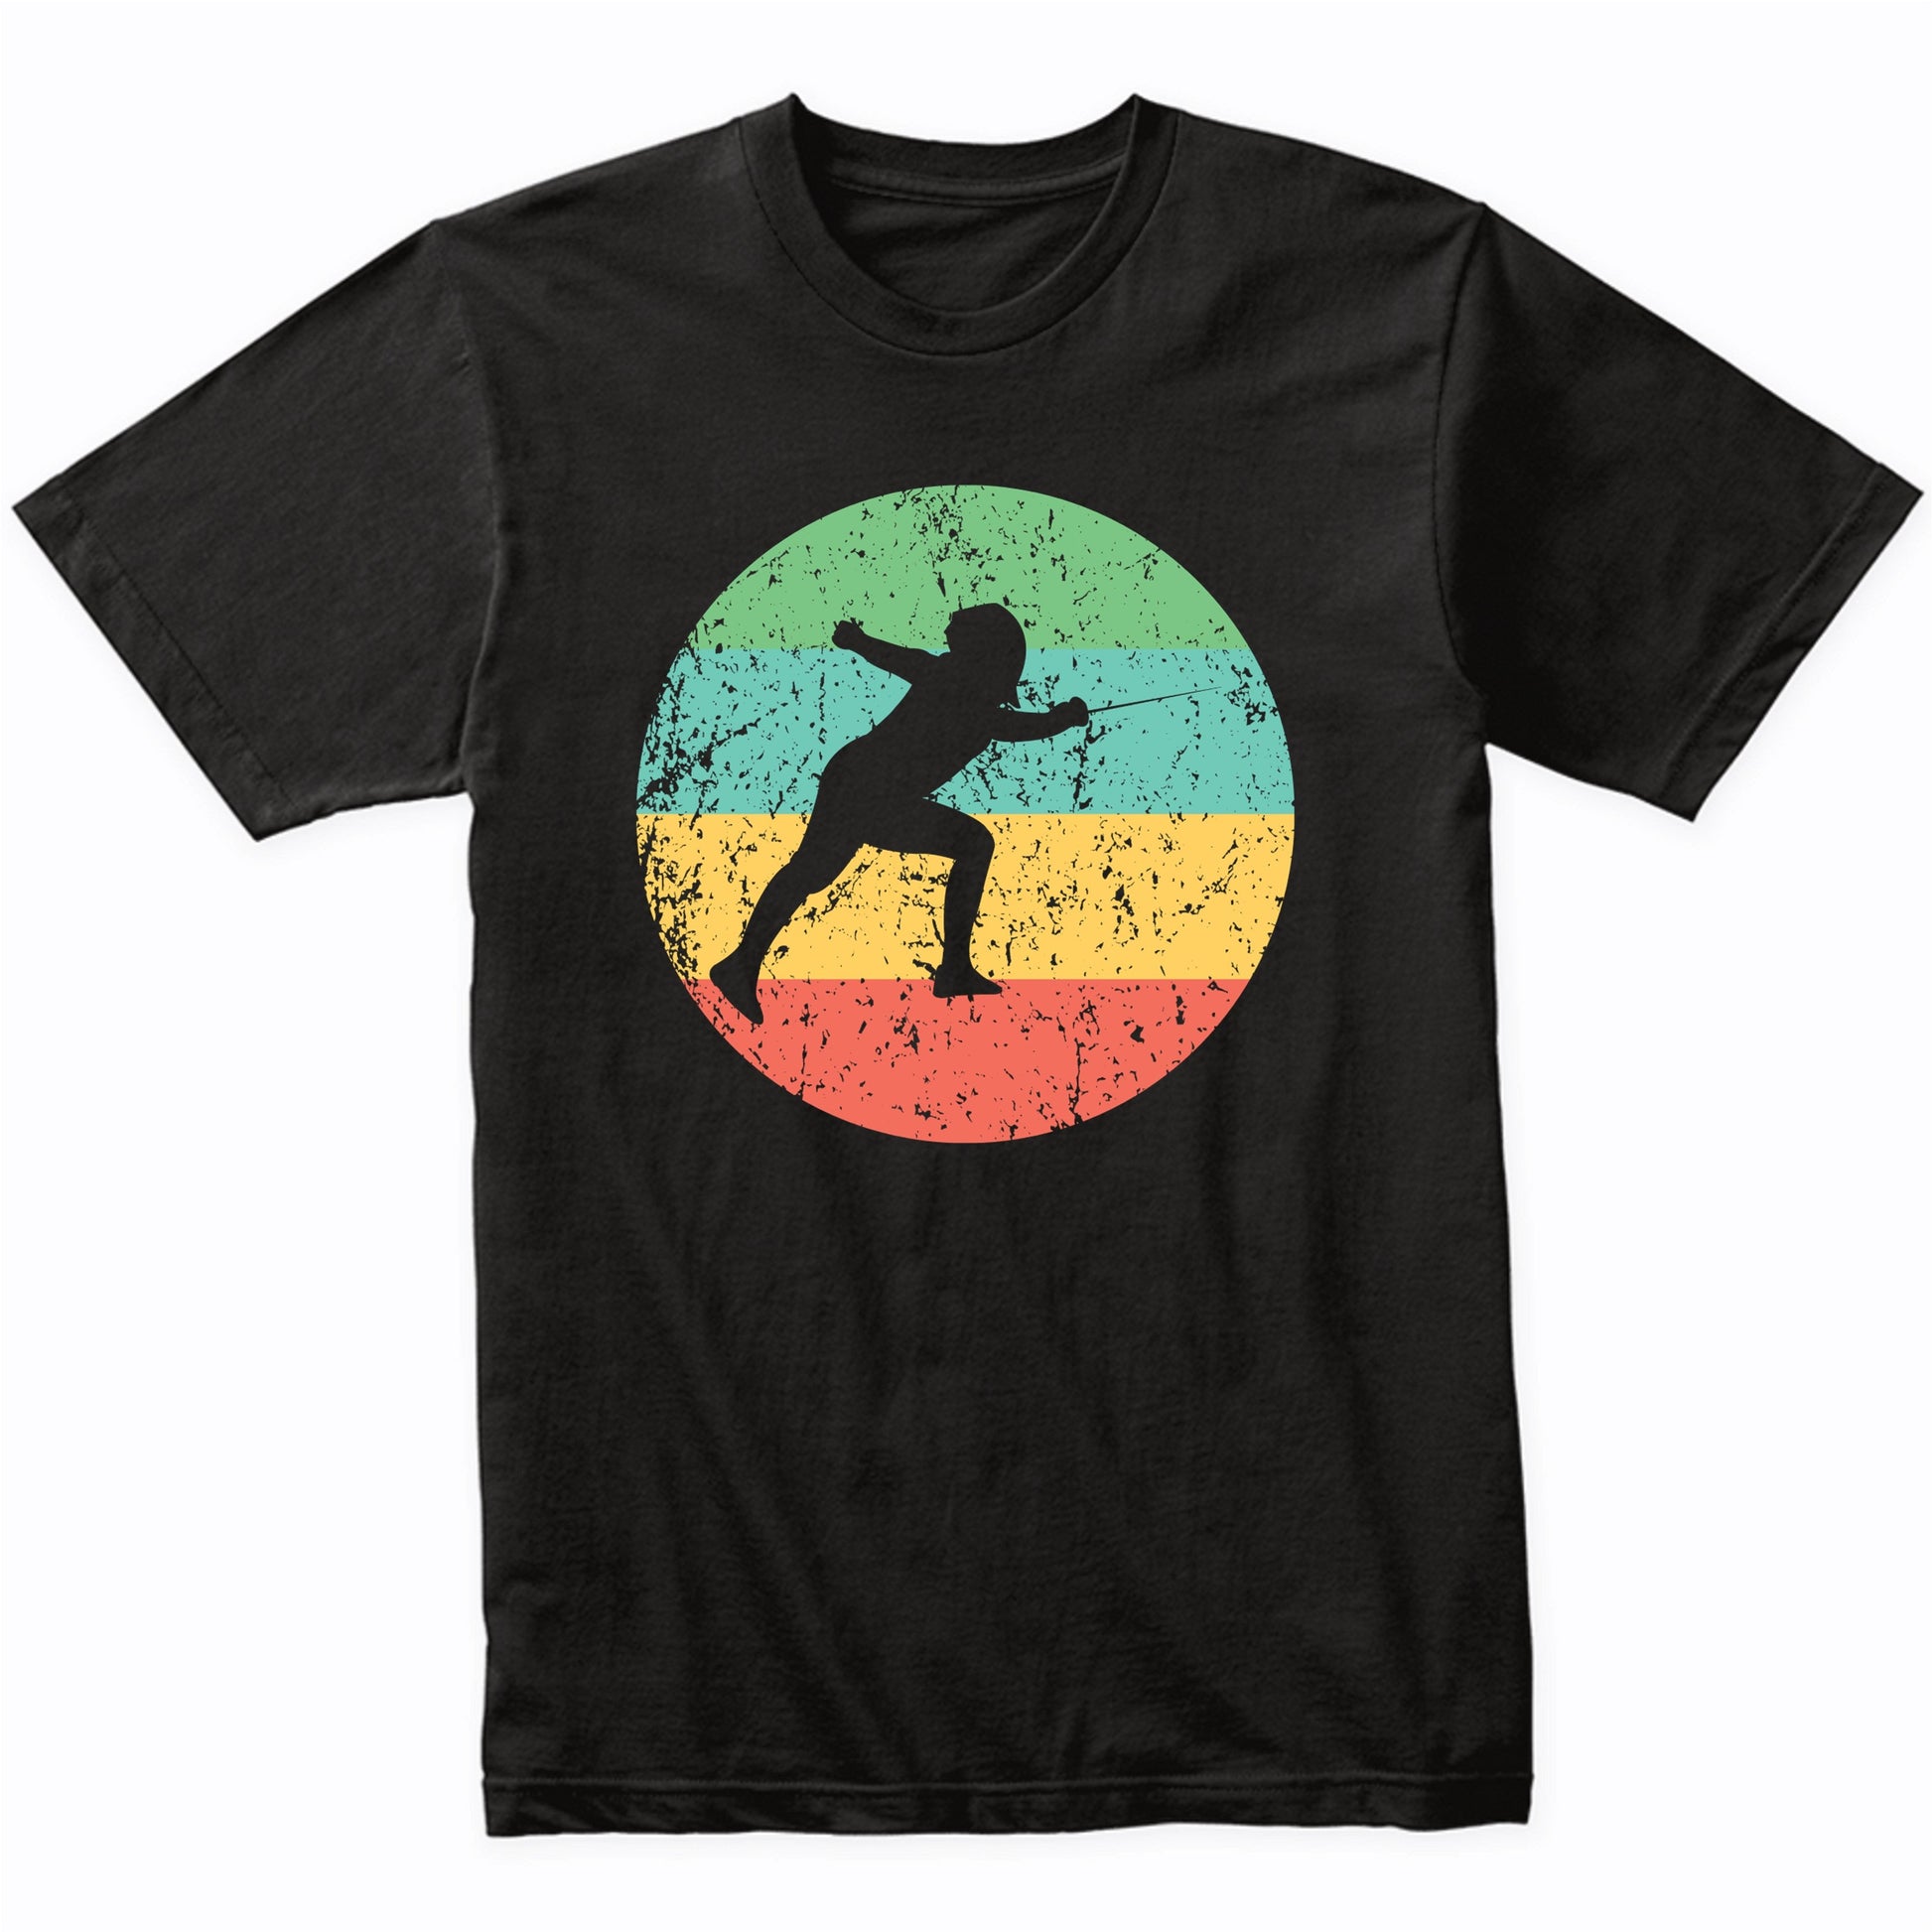 Fencing Shirt - Vintage Retro Fencer T-Shirt